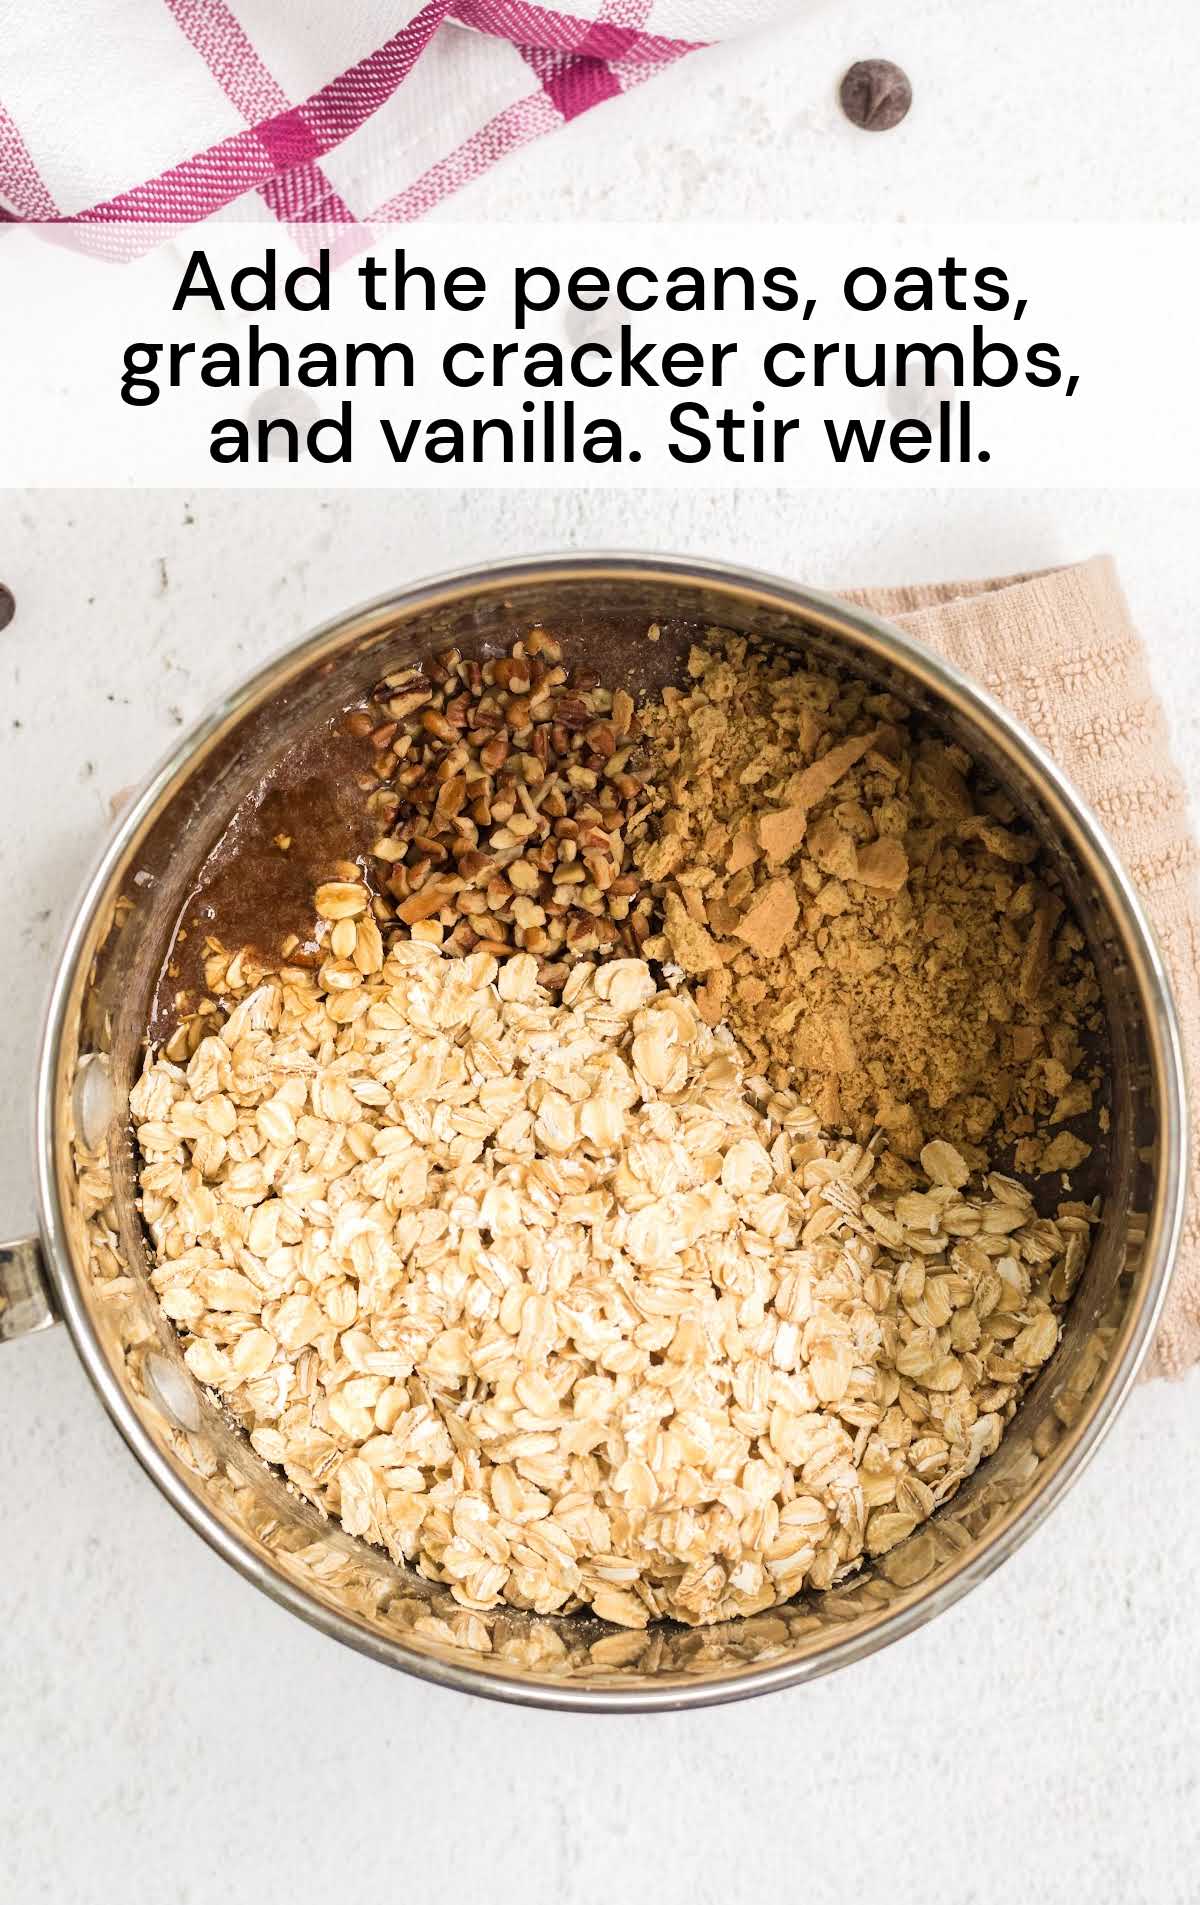 pecans, oats, graham cracker crumbs, and vanilla stir in a pot